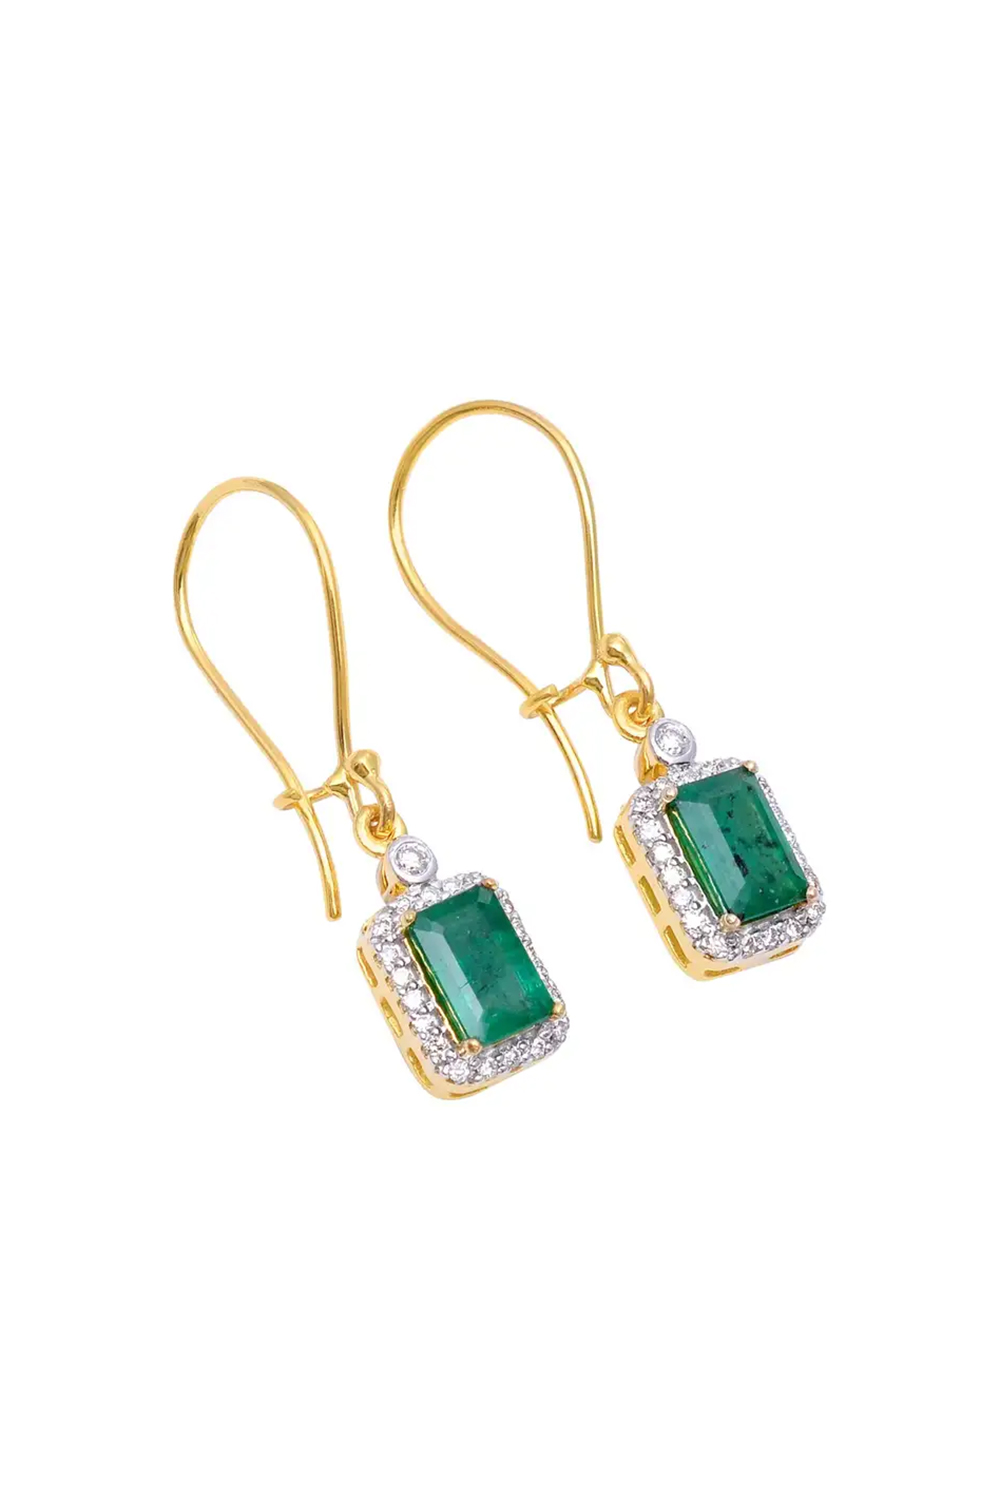 Emerald Dangle Earrings with Diamond in 14k Gold